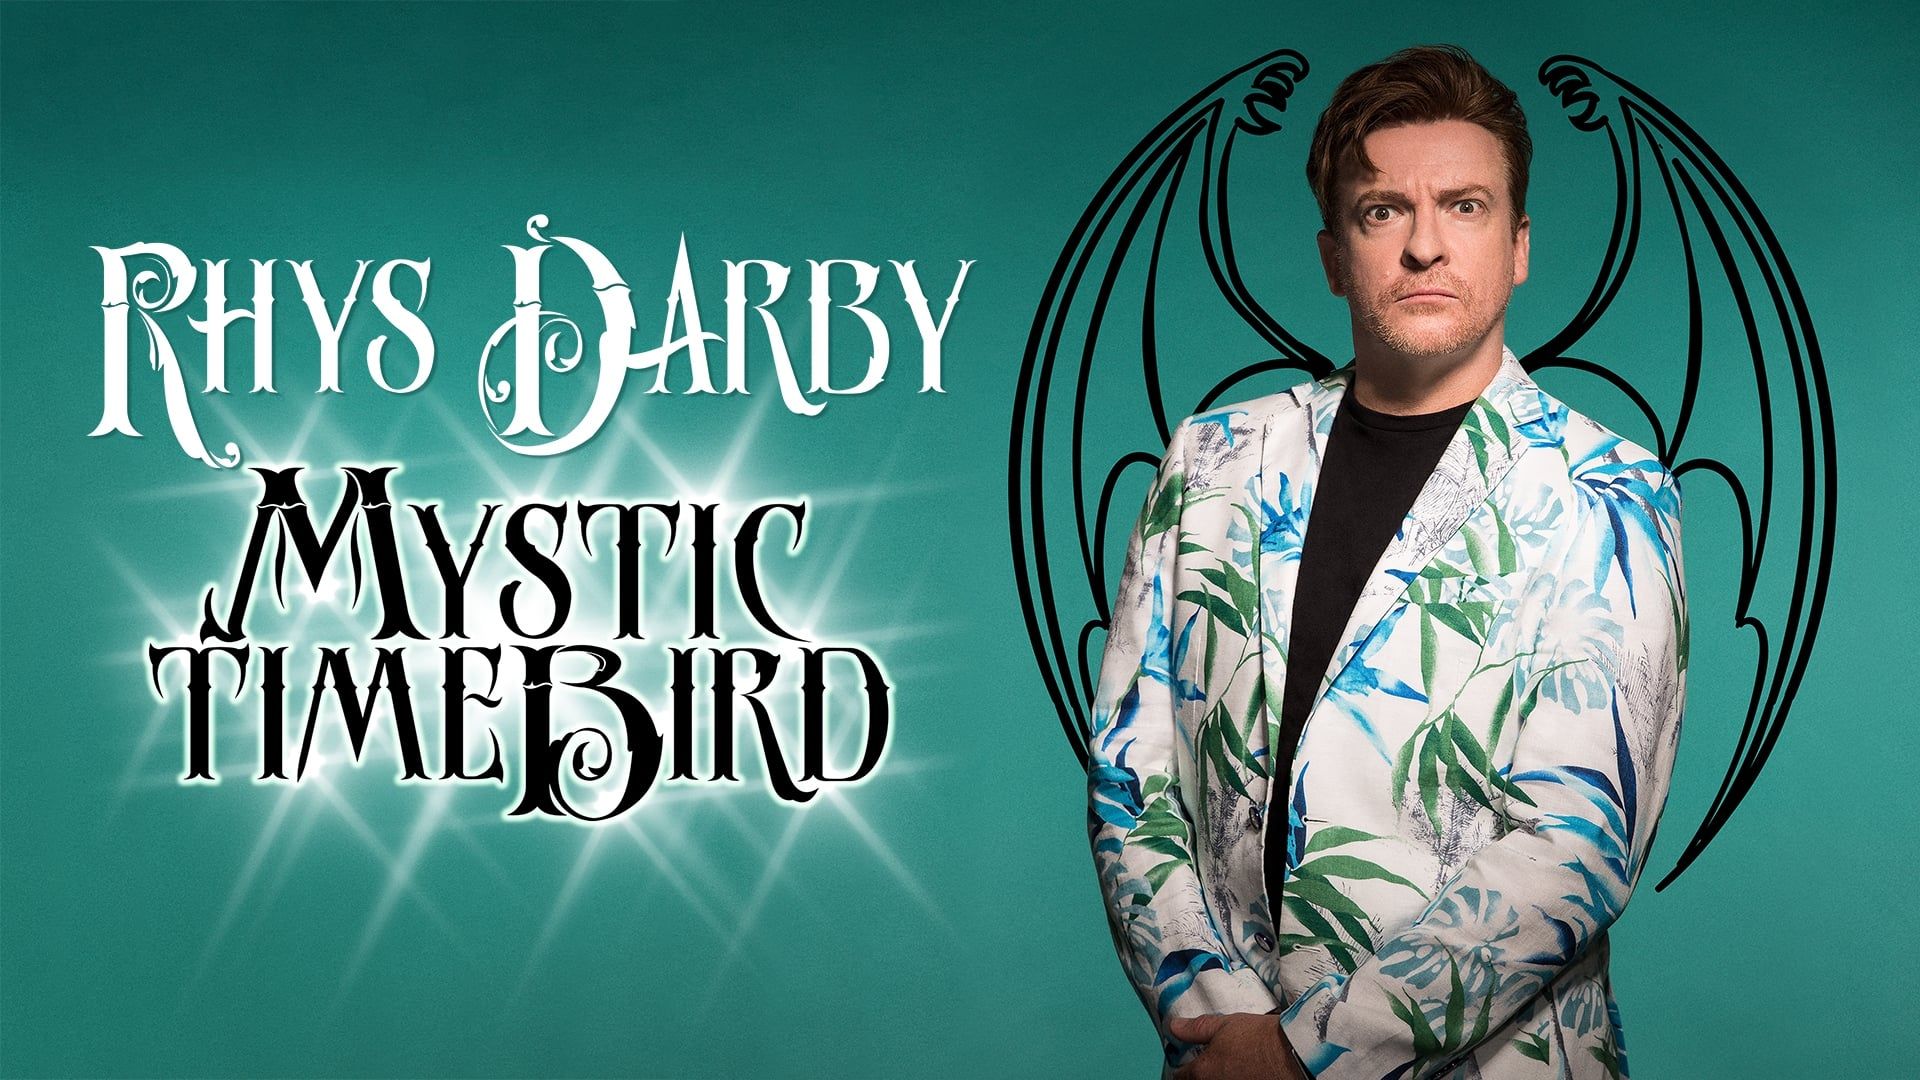 Rhys Darby: Mystic Time Bird background